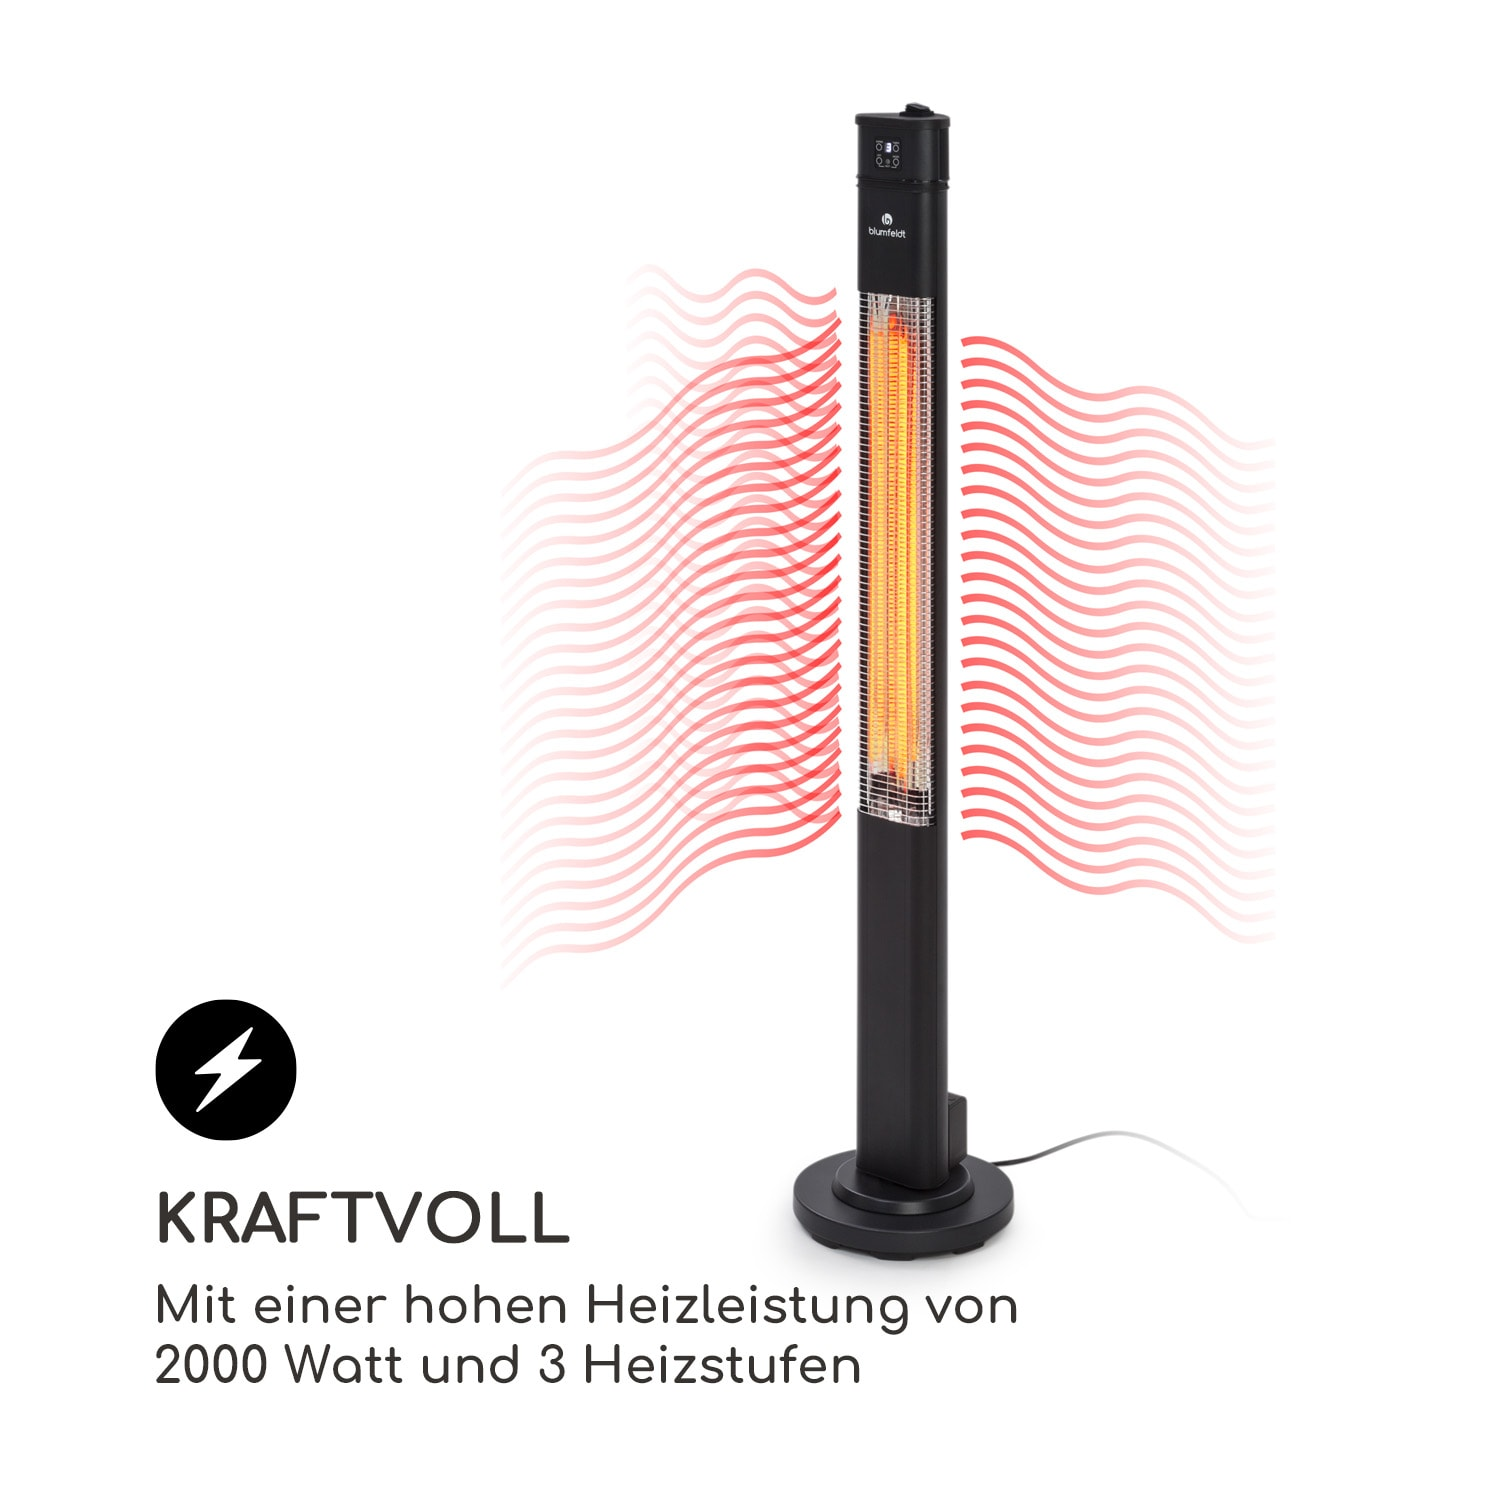 BLUMFELDT Heat Guru Plus Watt) Heizstrahler (2000